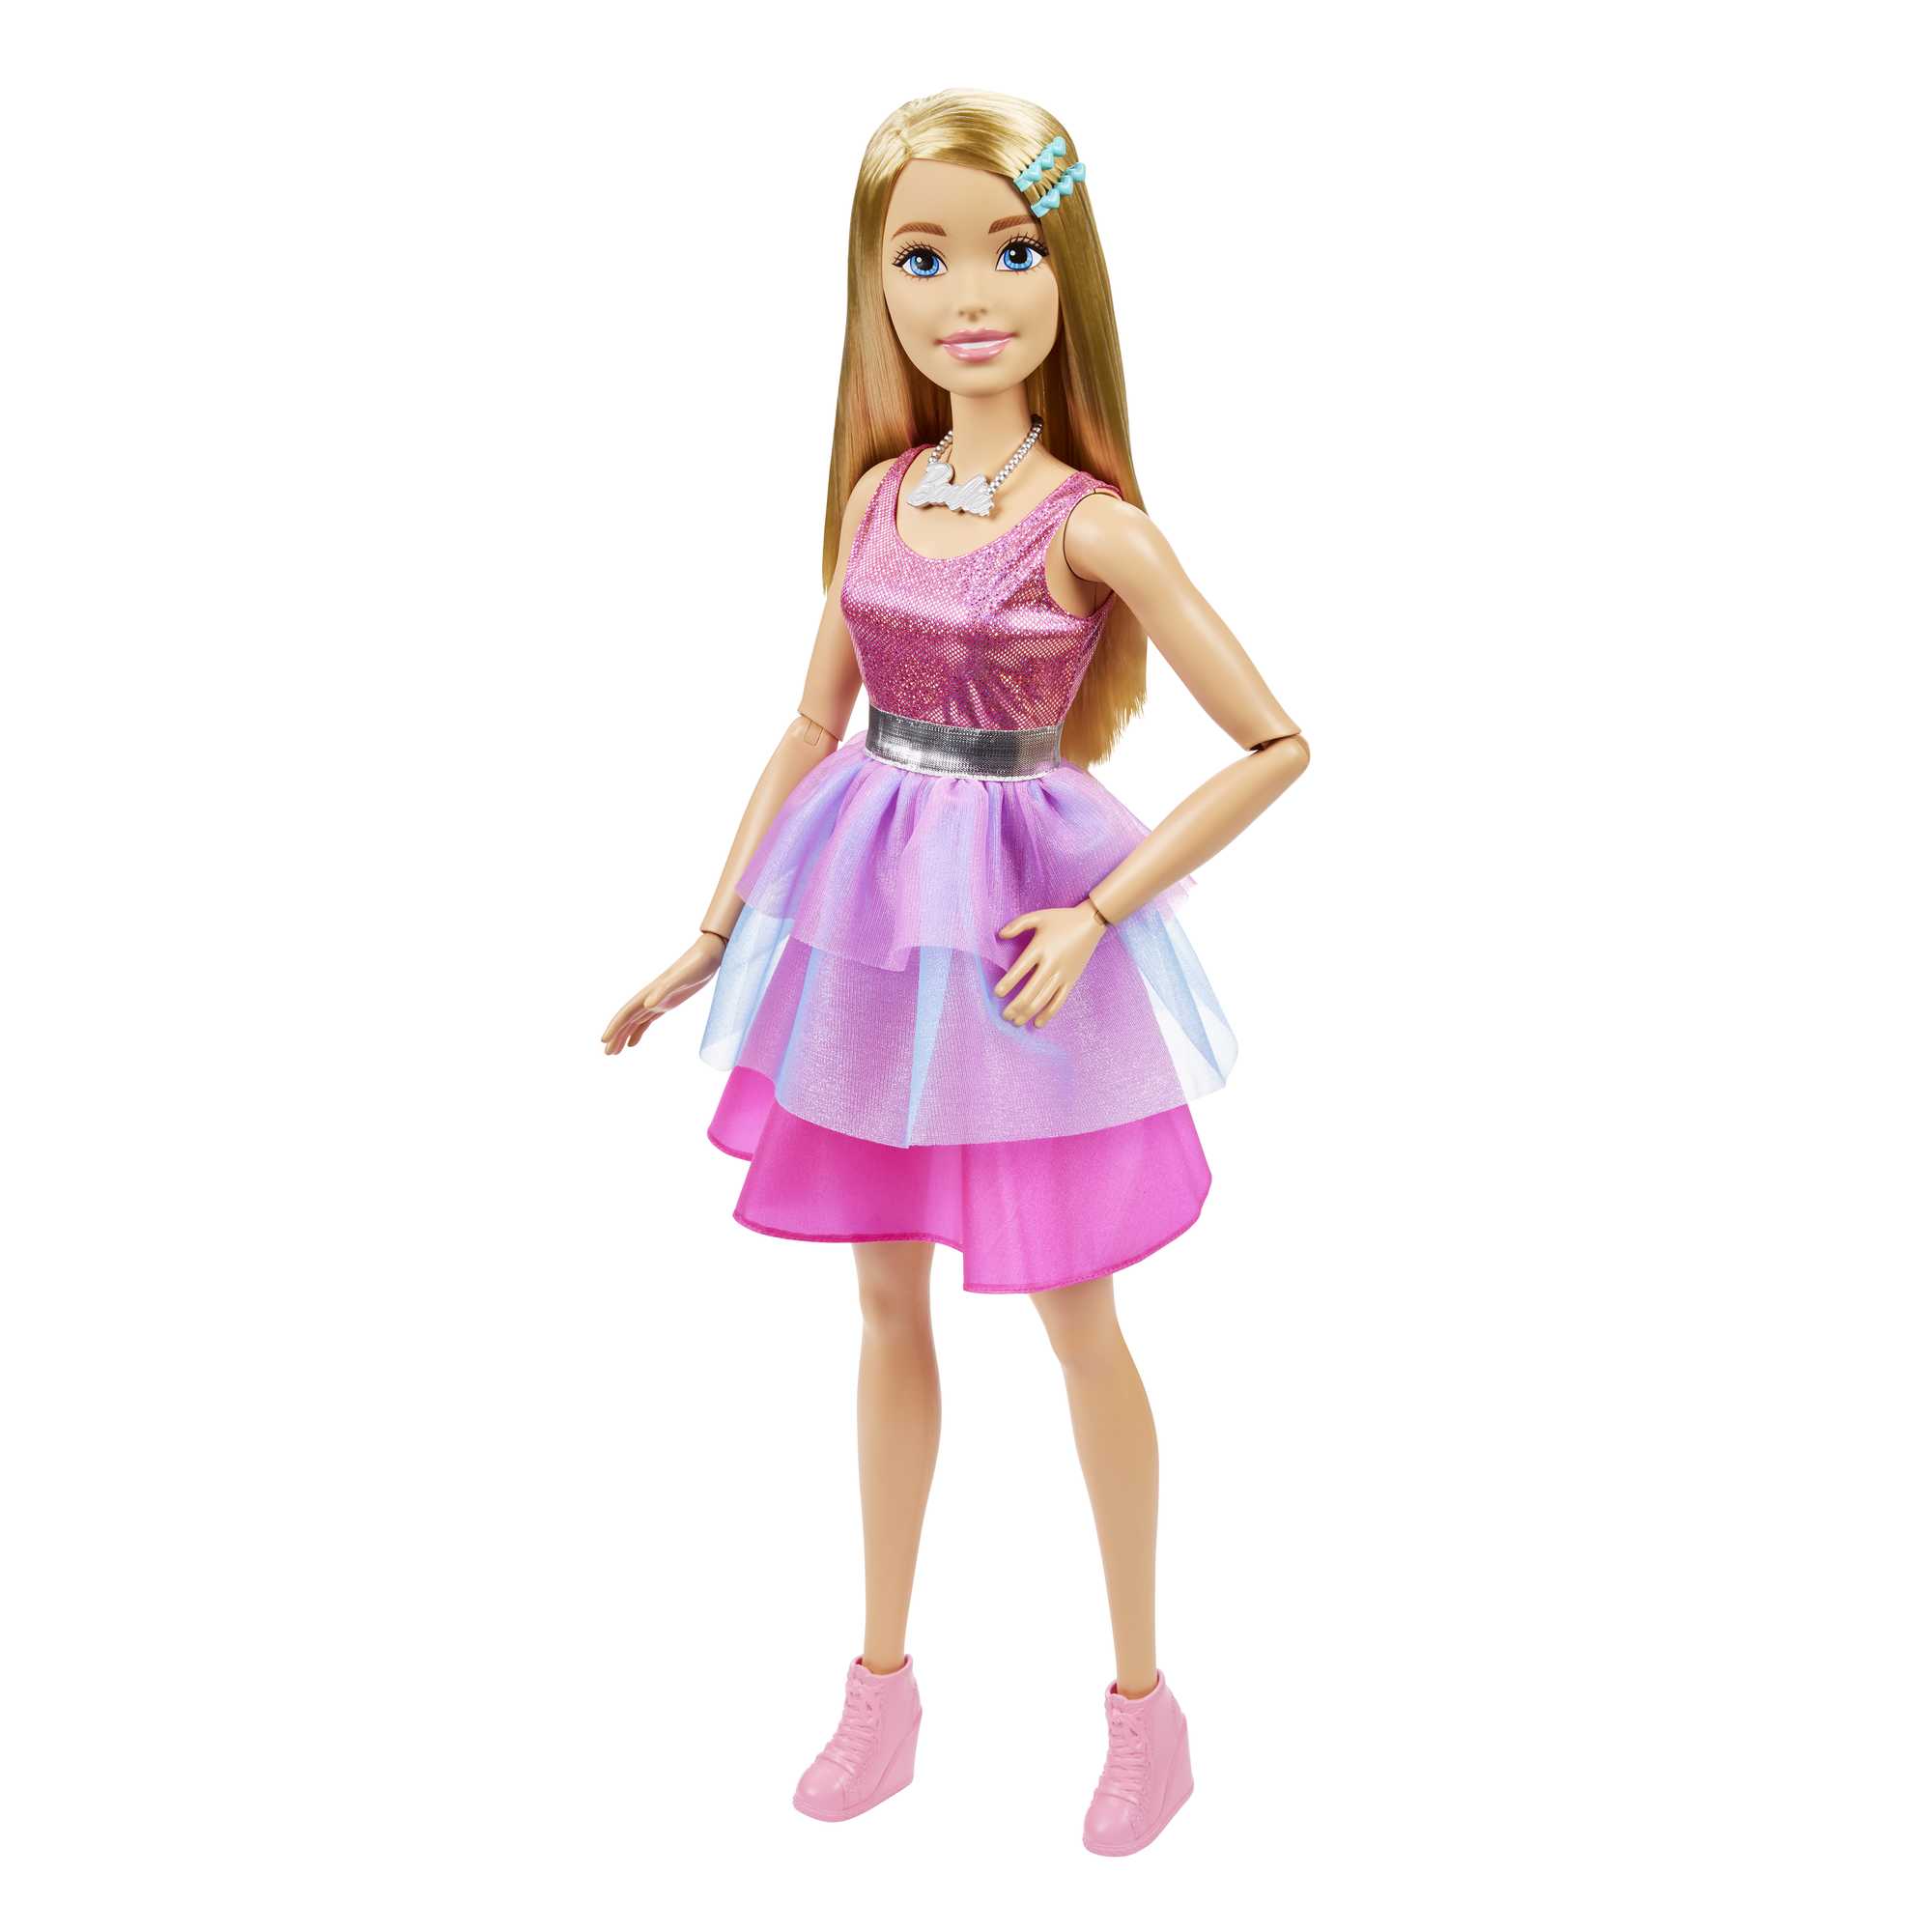 Barbie Dreamhouse Adventures Swim'n Dive Doll, 11.5-inch in